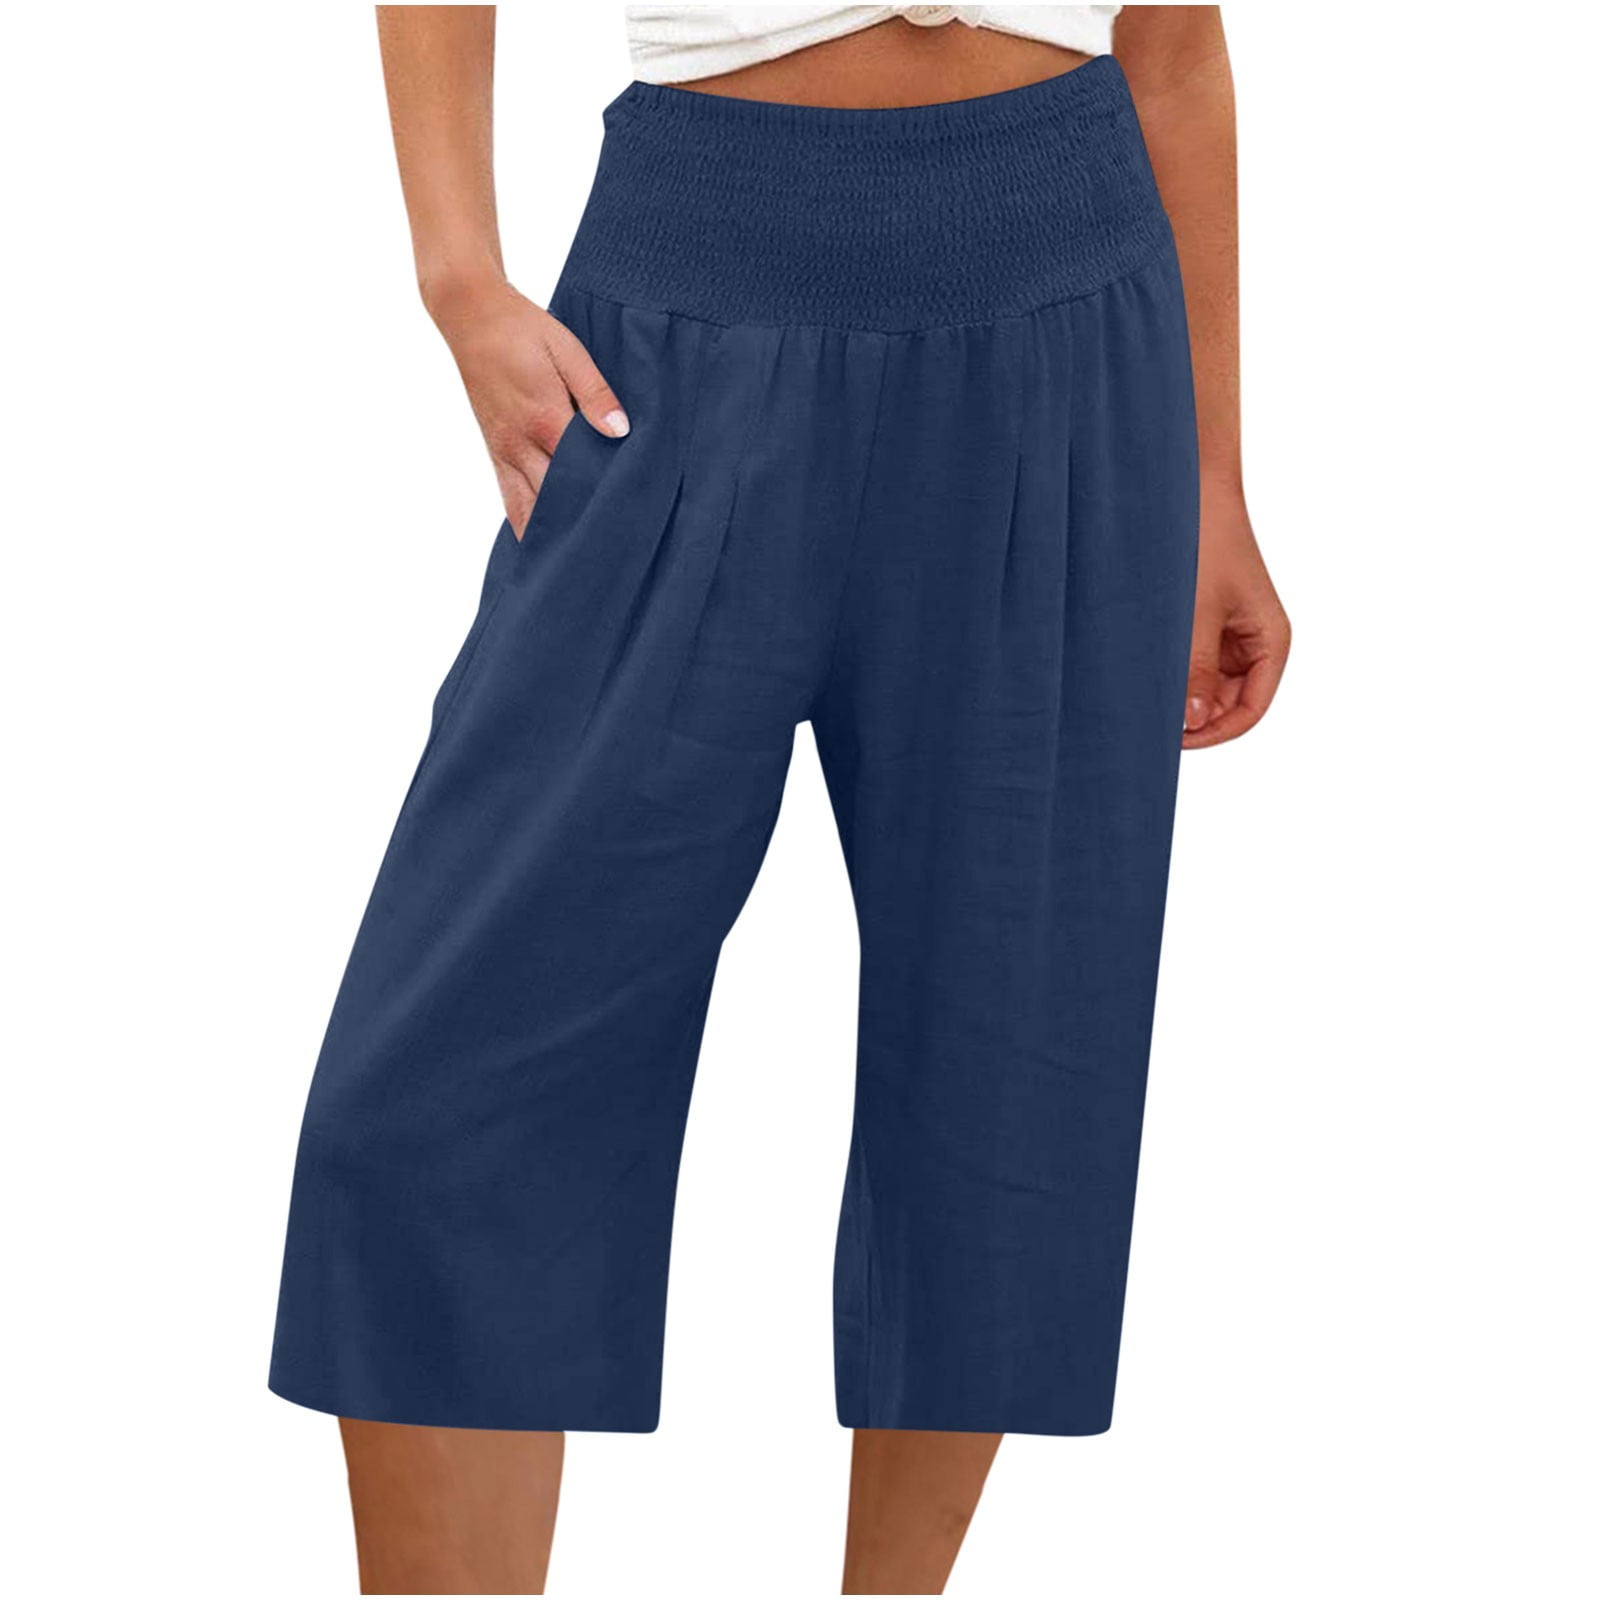 KINPLE Bootcut Yoga Pants for Women High Waist Dress Pants Flare Capri  Leggings Bootleg Workout Pant for Casual Work